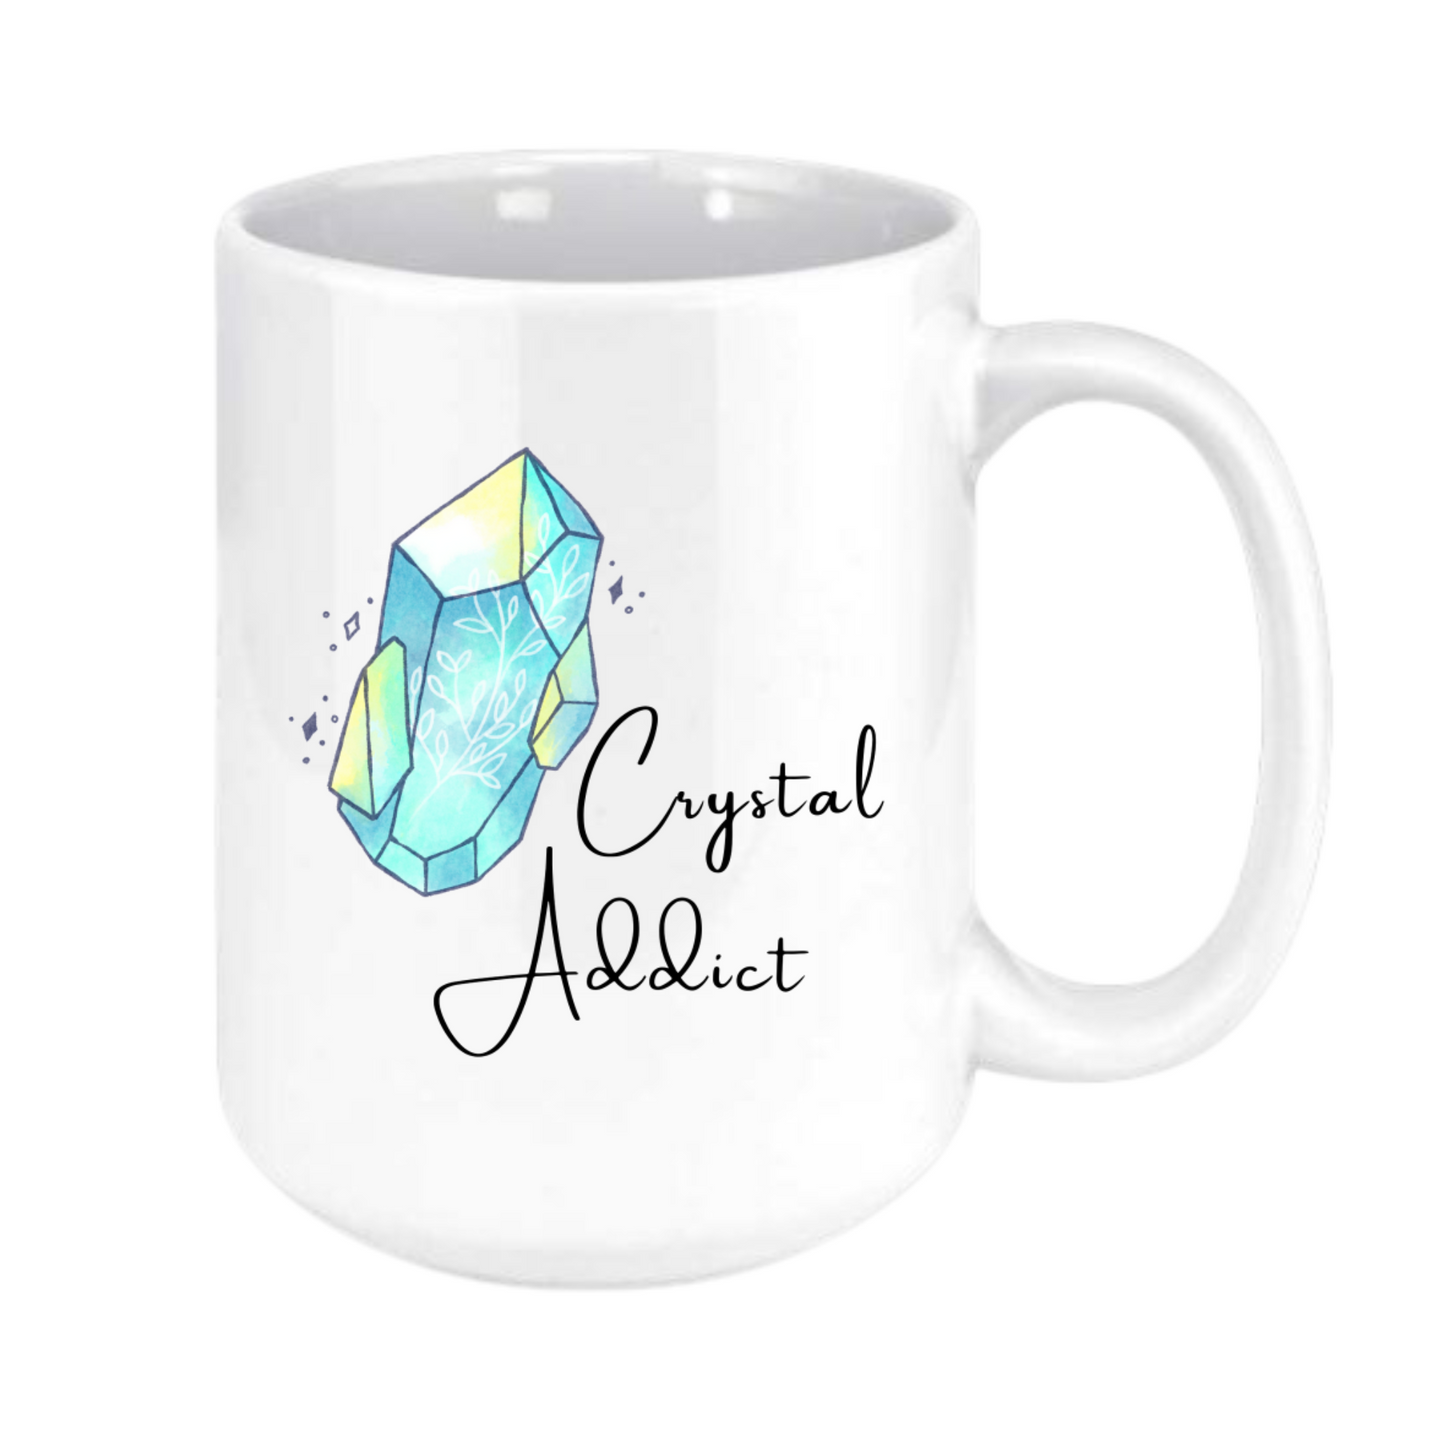 Crystal addict mug